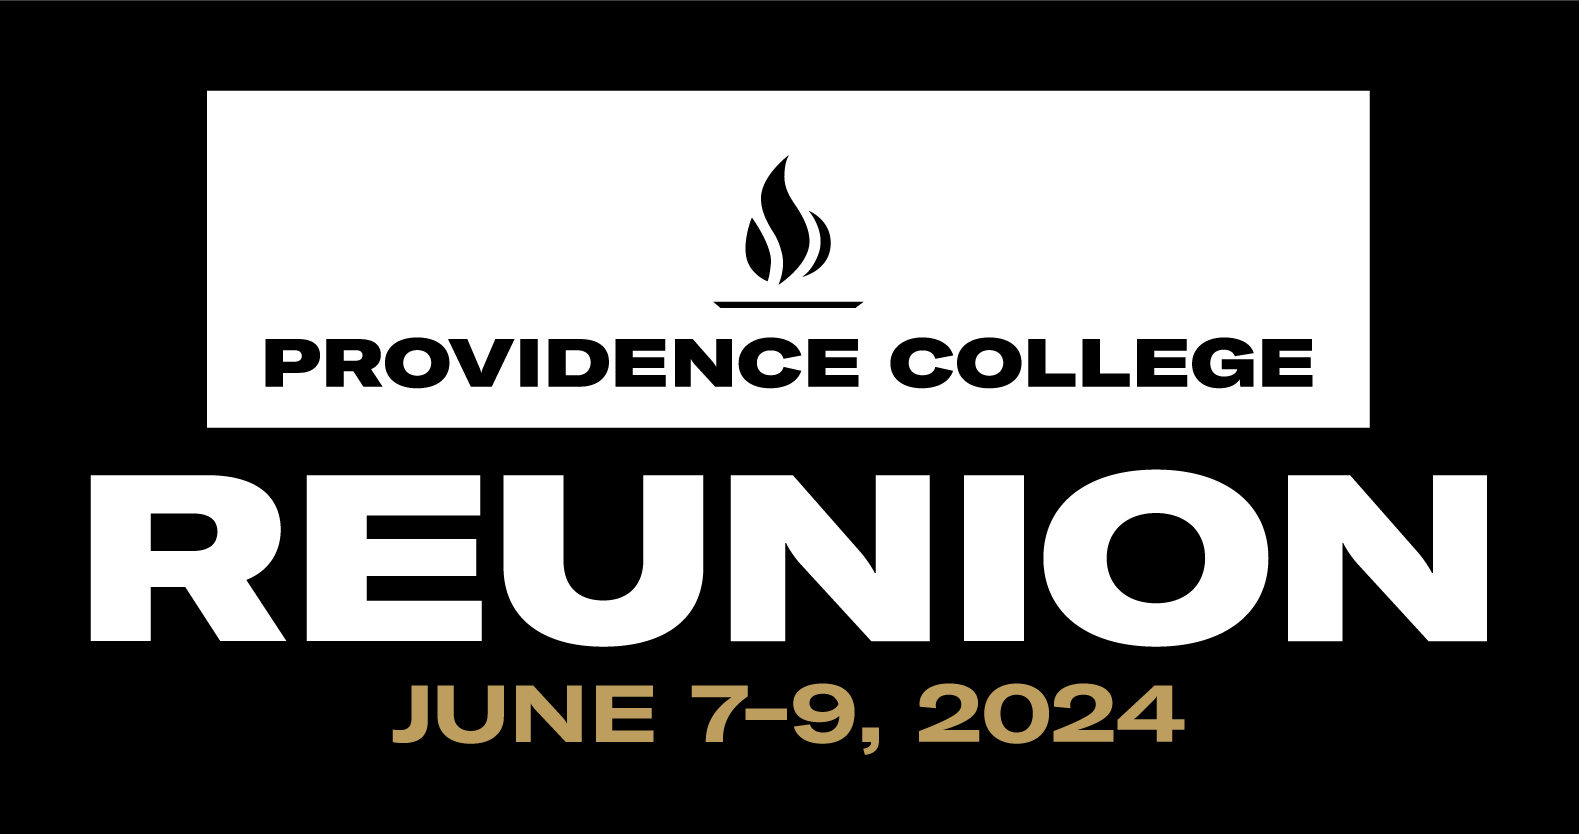 providence college reunion june 7-9, 2024